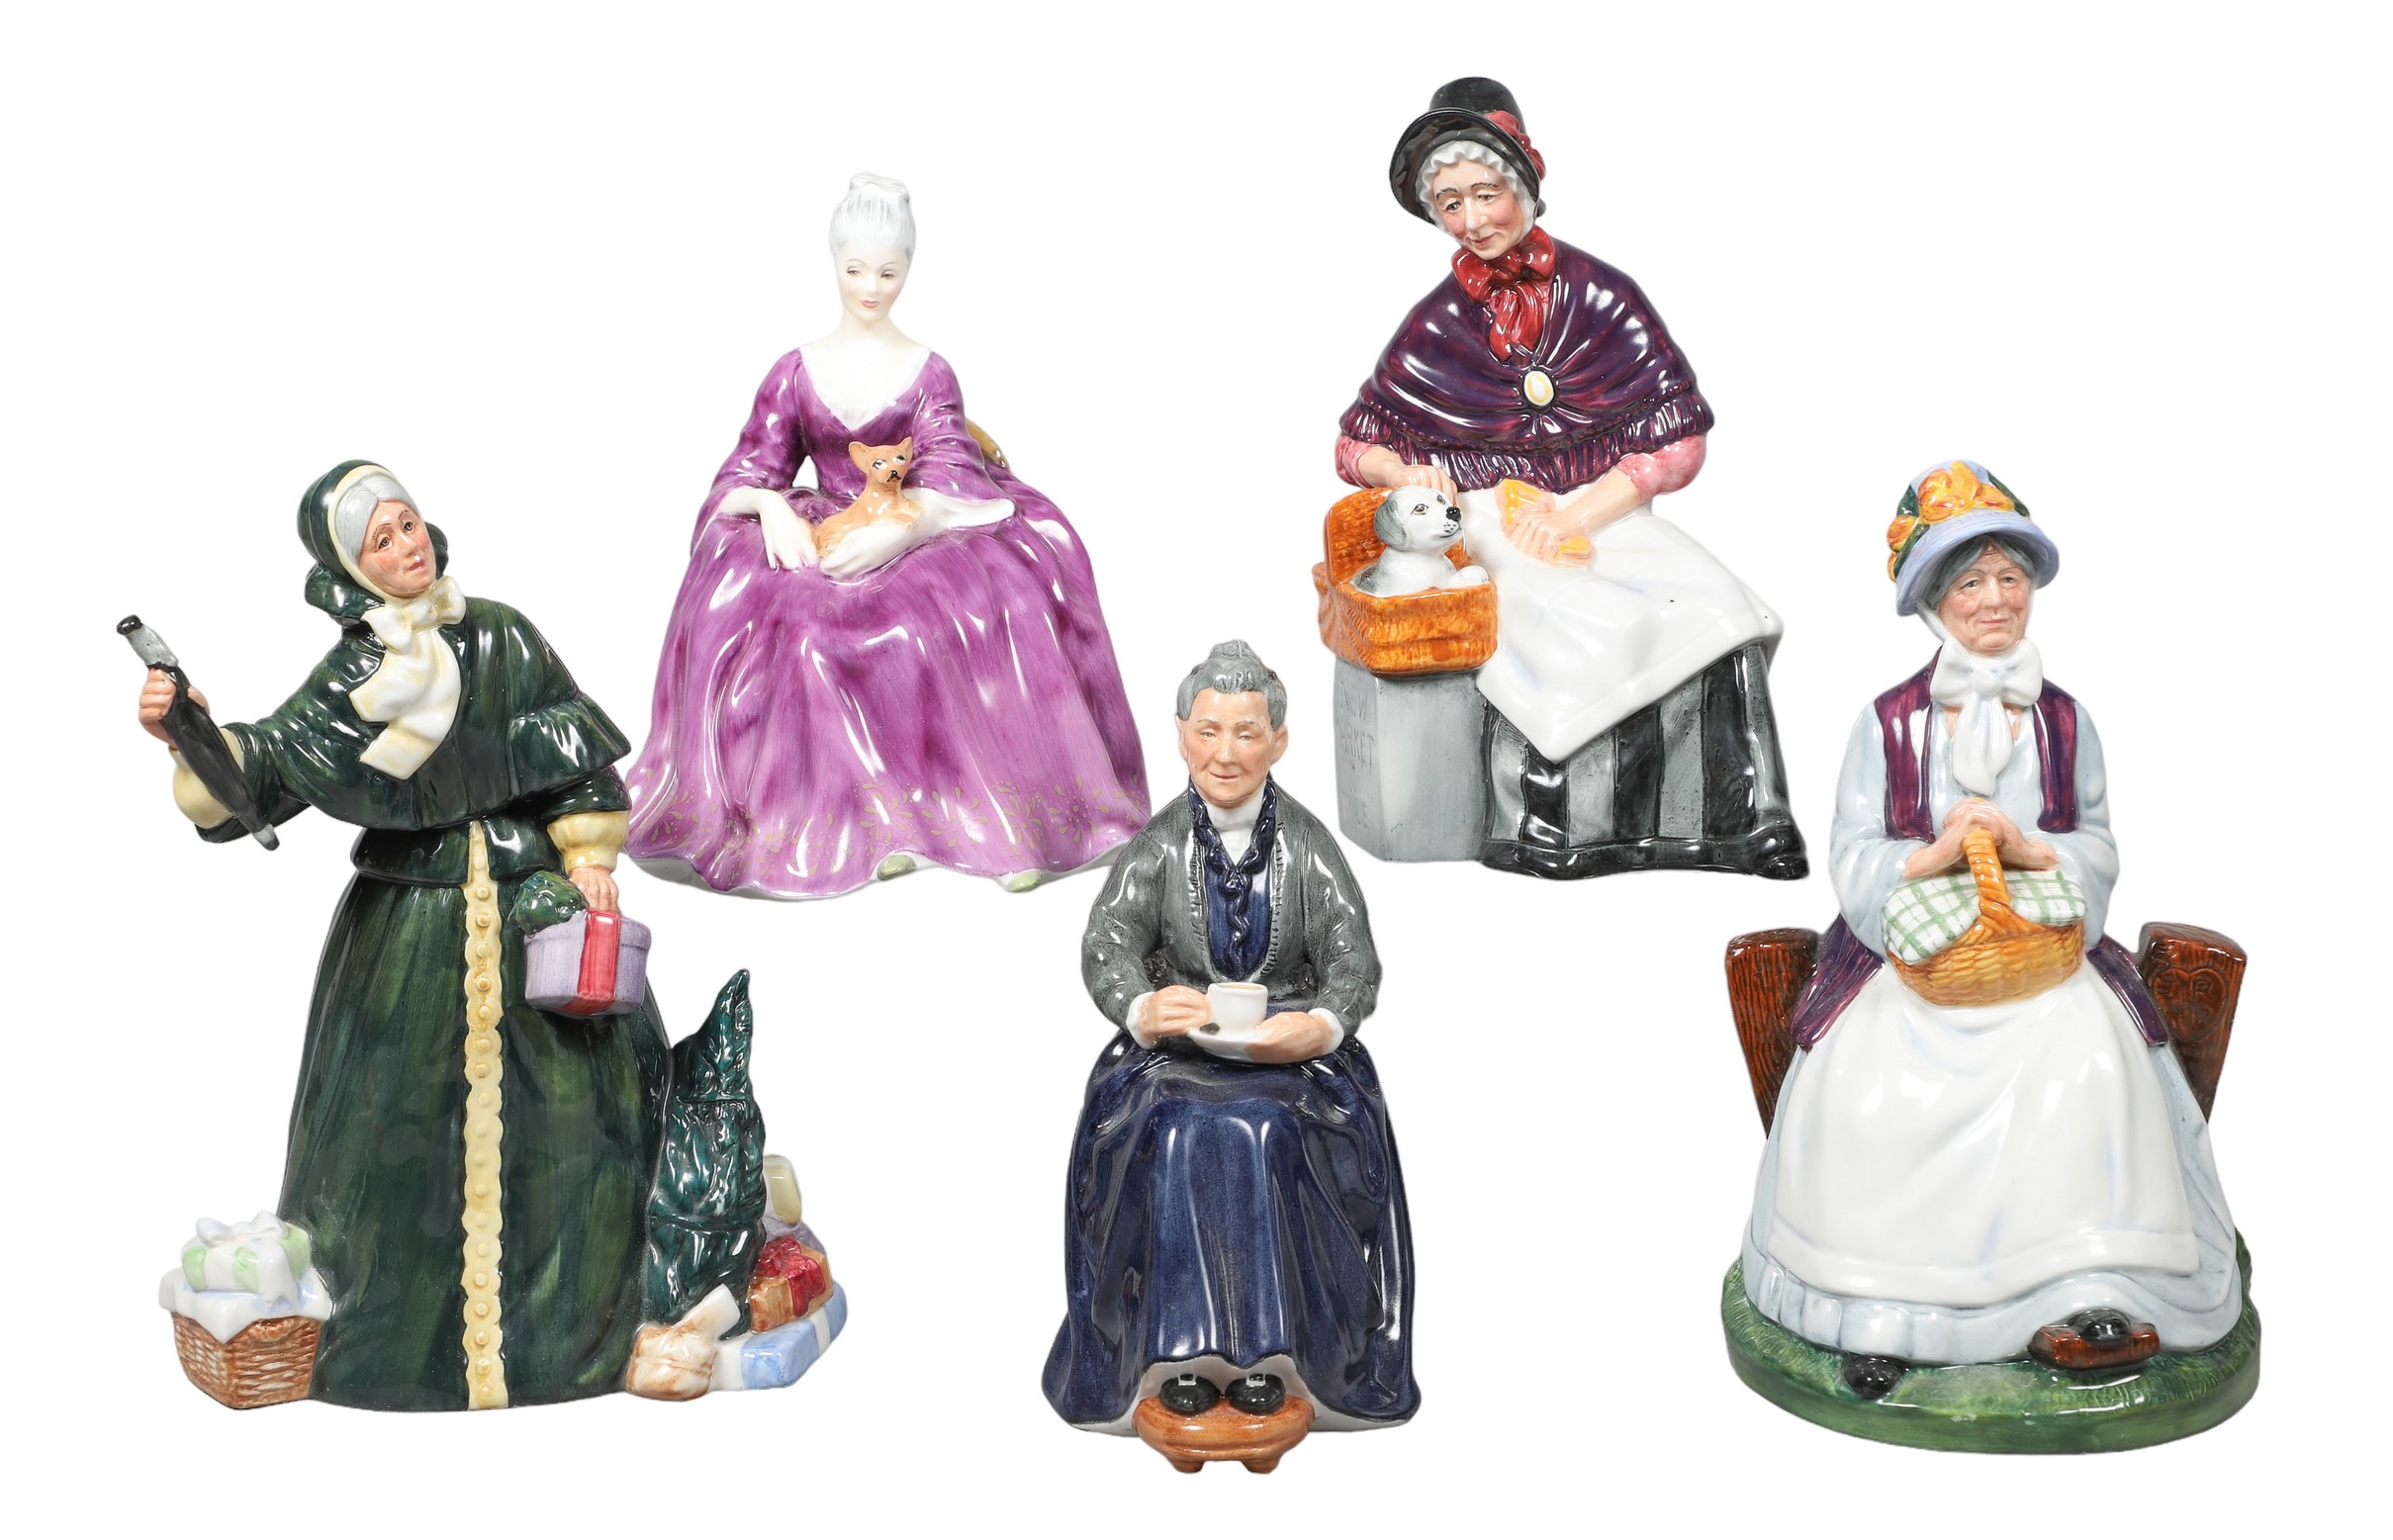  5 Royal Doulton porcelain figurines  2e0bde